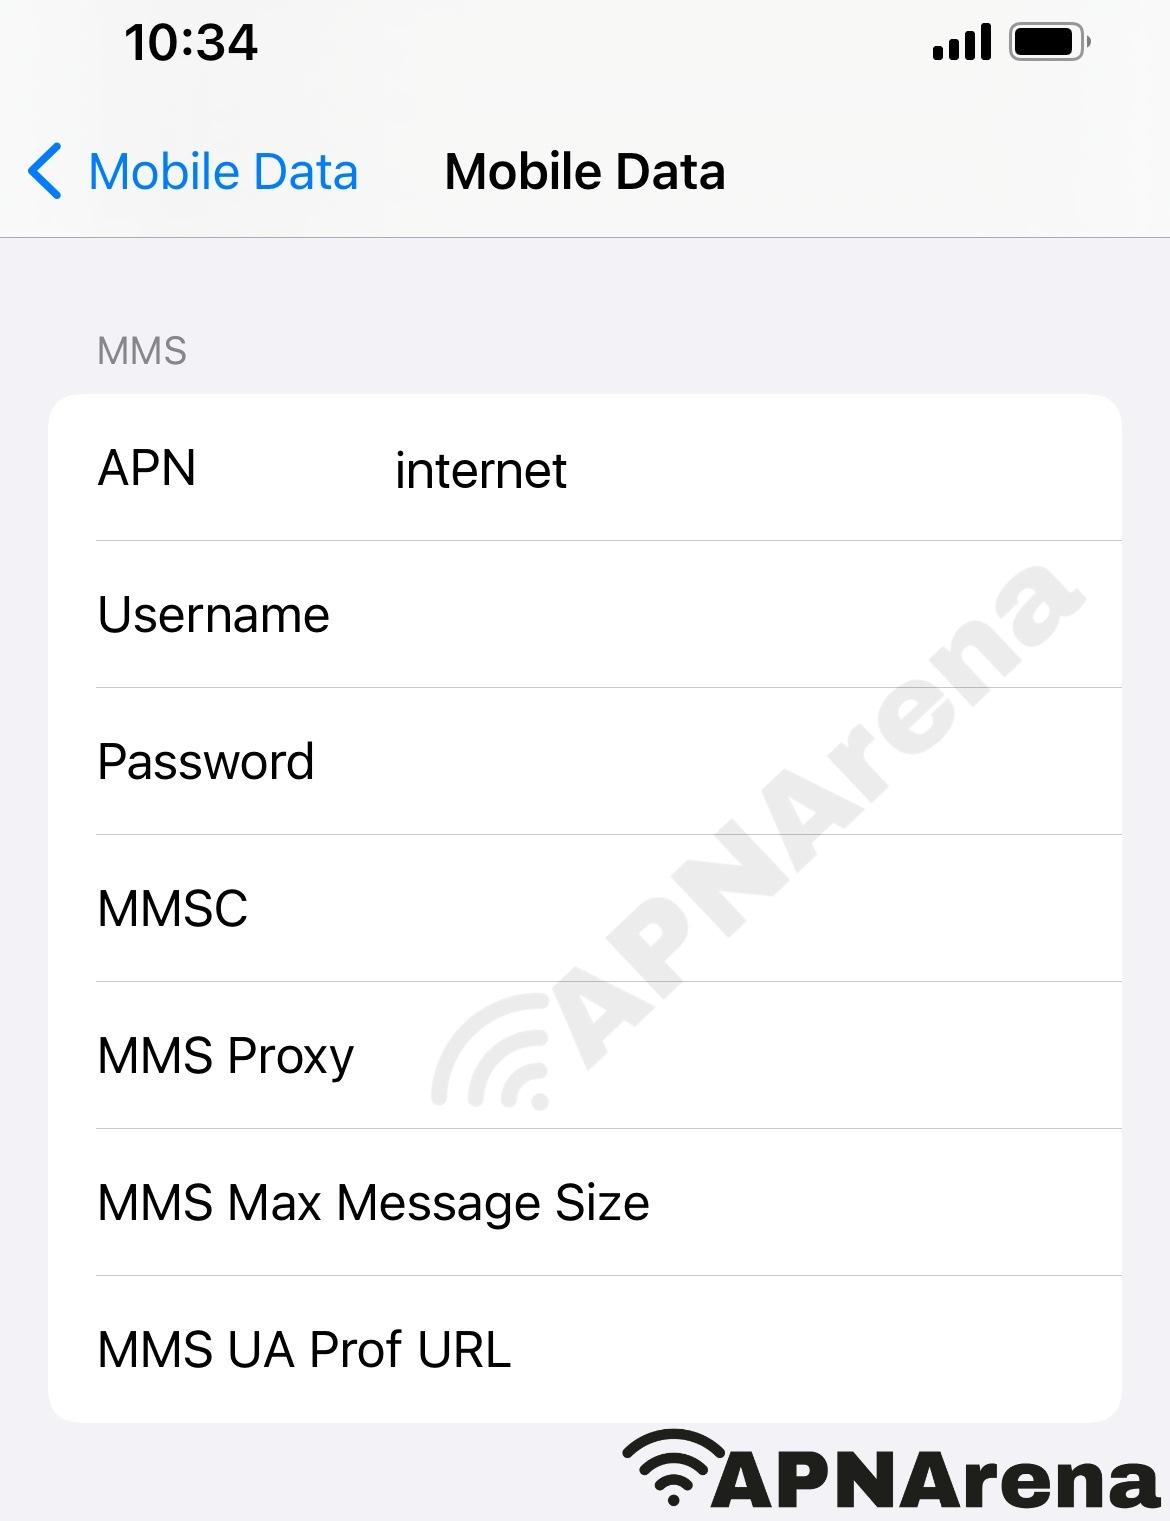 Telmob (Onatel) MMS Settings for iPhone